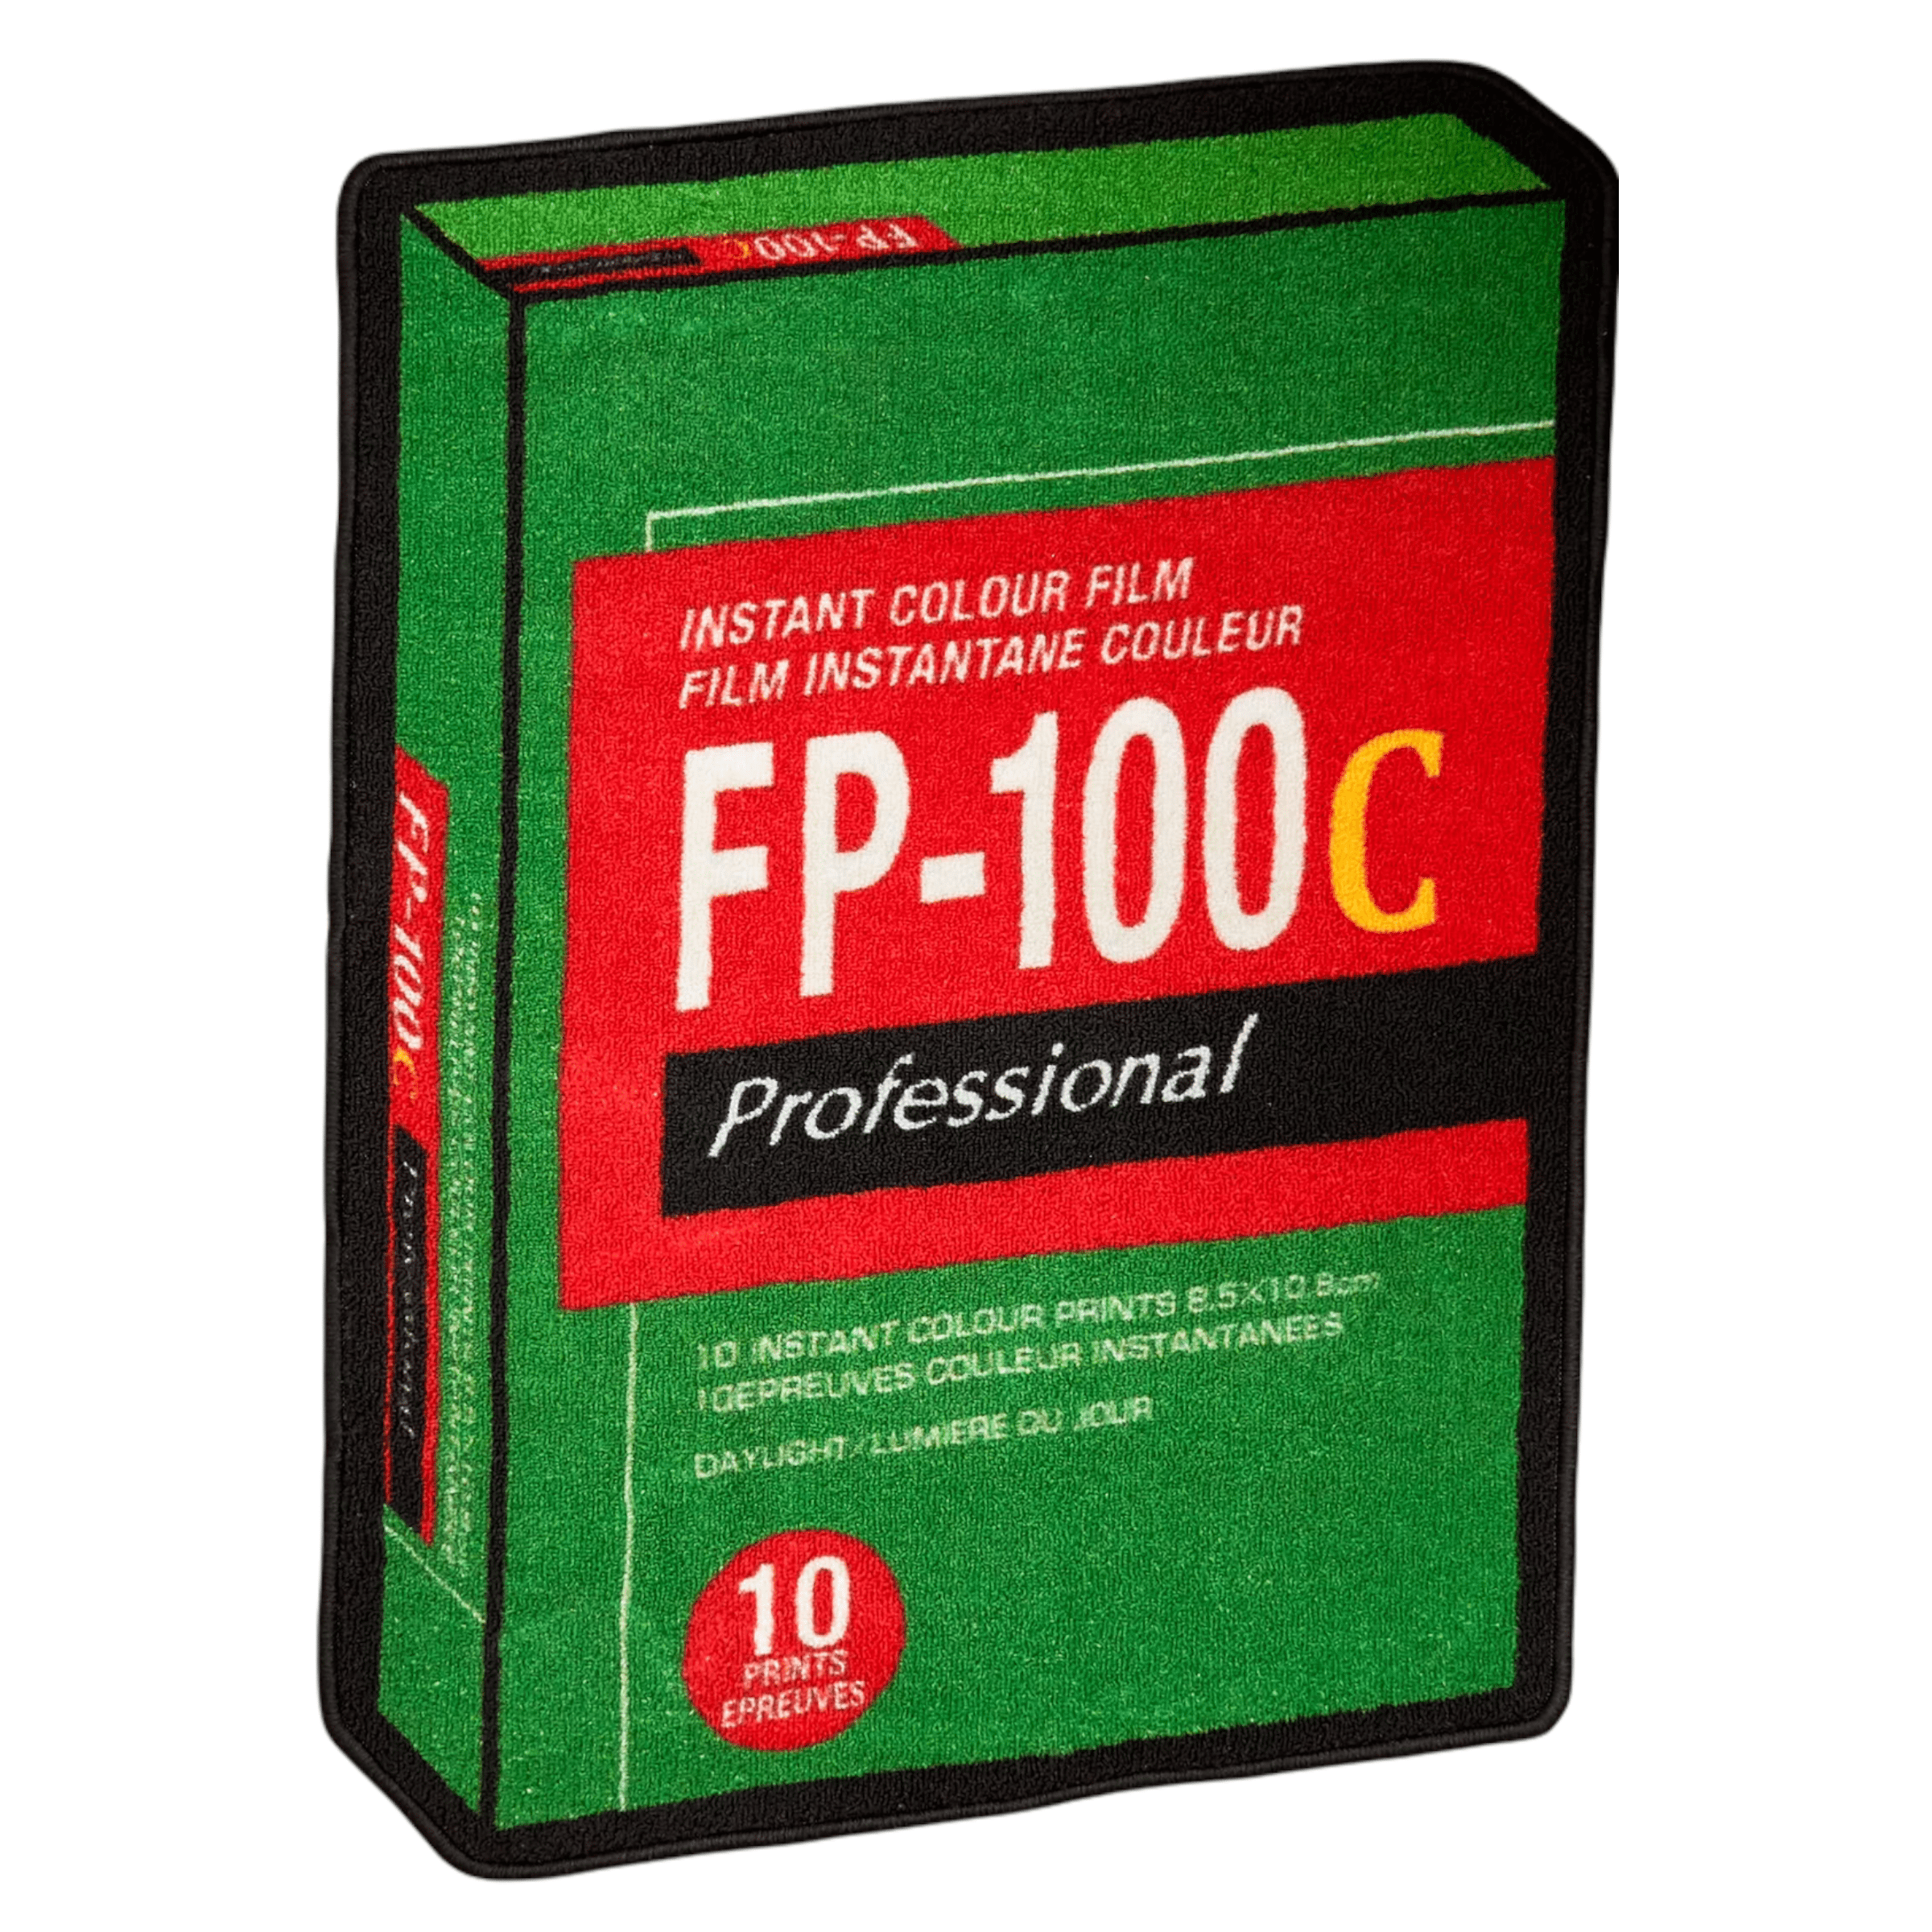 FP100c Instant Film Box Mini Rug Carpet gift for photographers